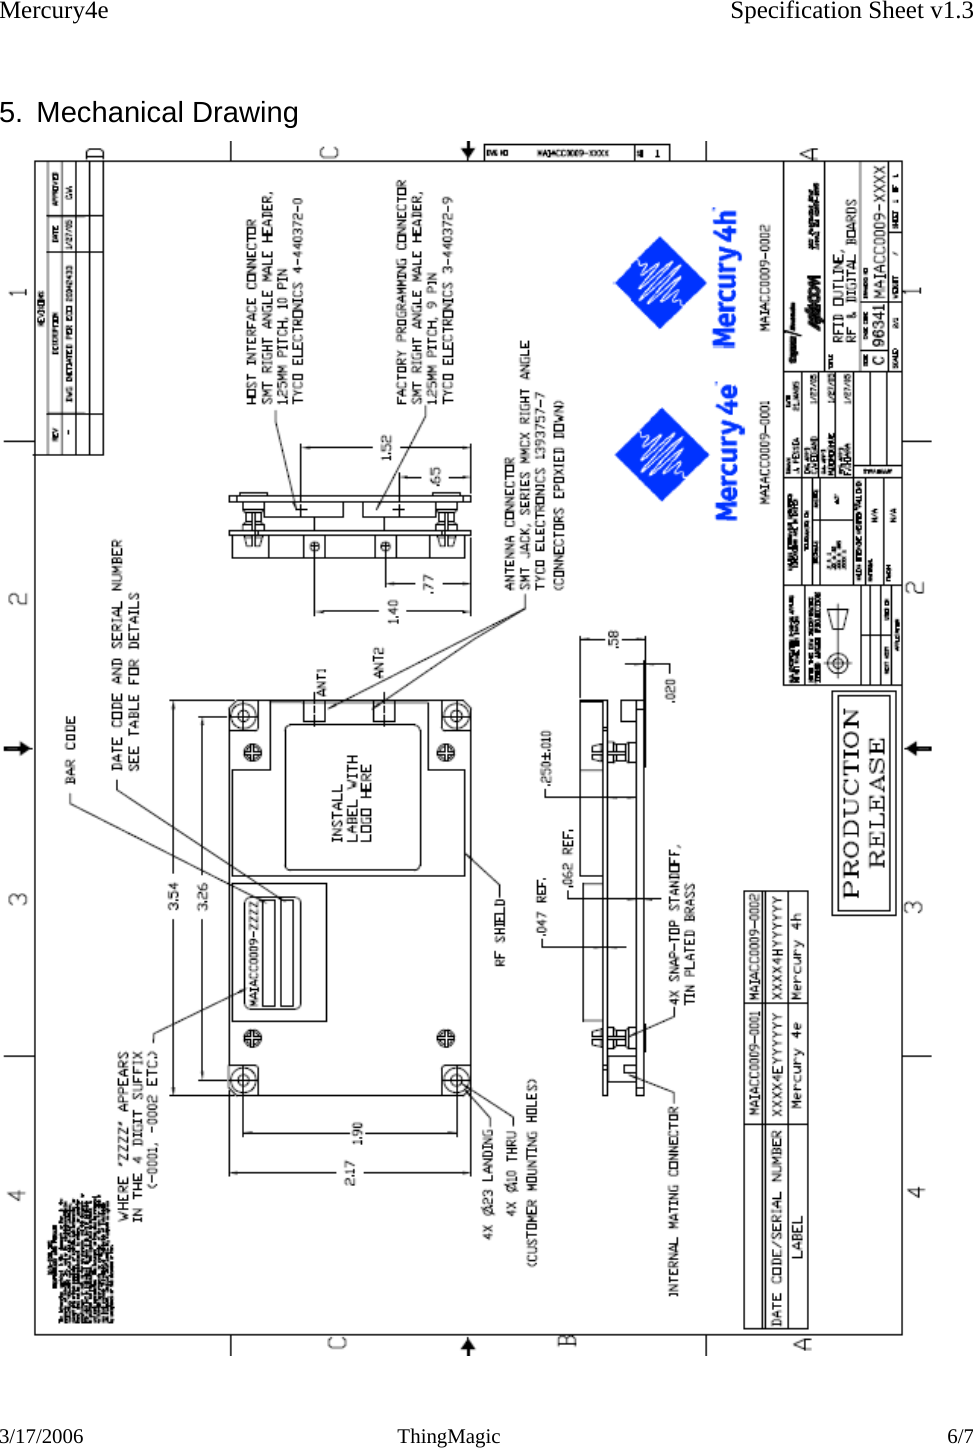 Mercury4e    Specification Sheet v1.3 3/17/2006 ThingMagic  6/7 5. Mechanical Drawing  